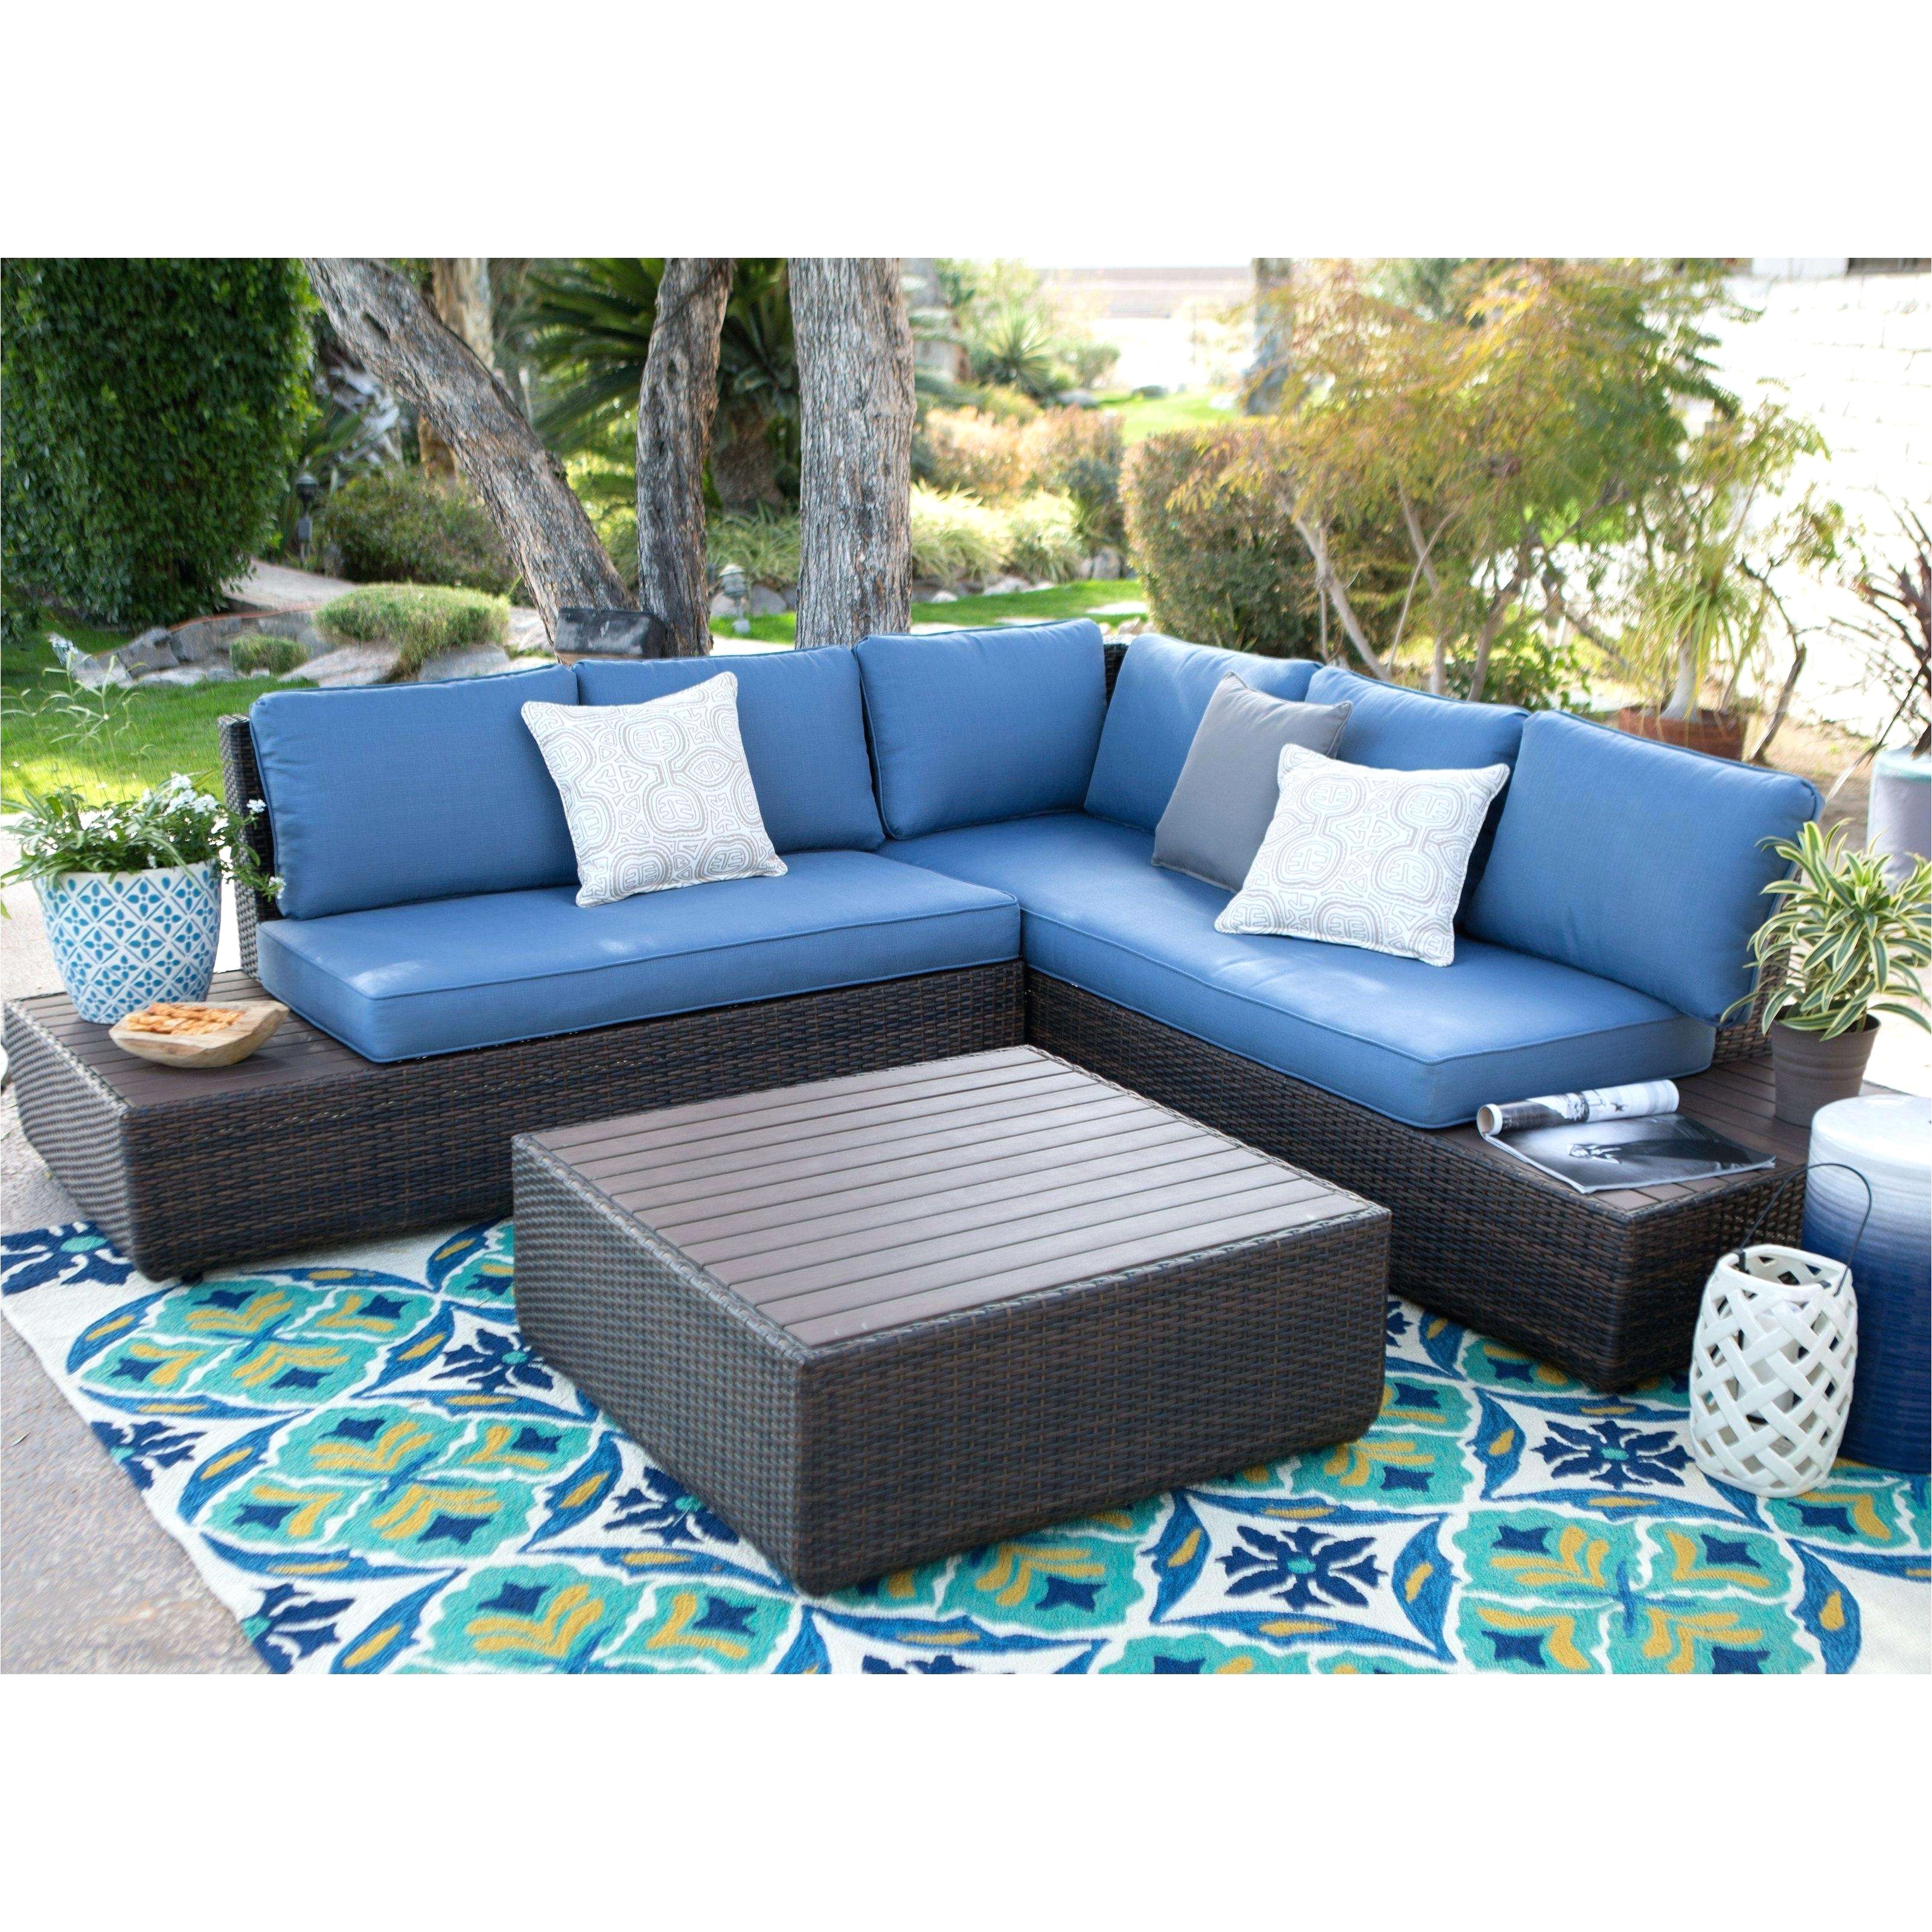 target sleeper sofa fresh patio bench cushions unique wicker outdoor sofa 0d patio chairs sale